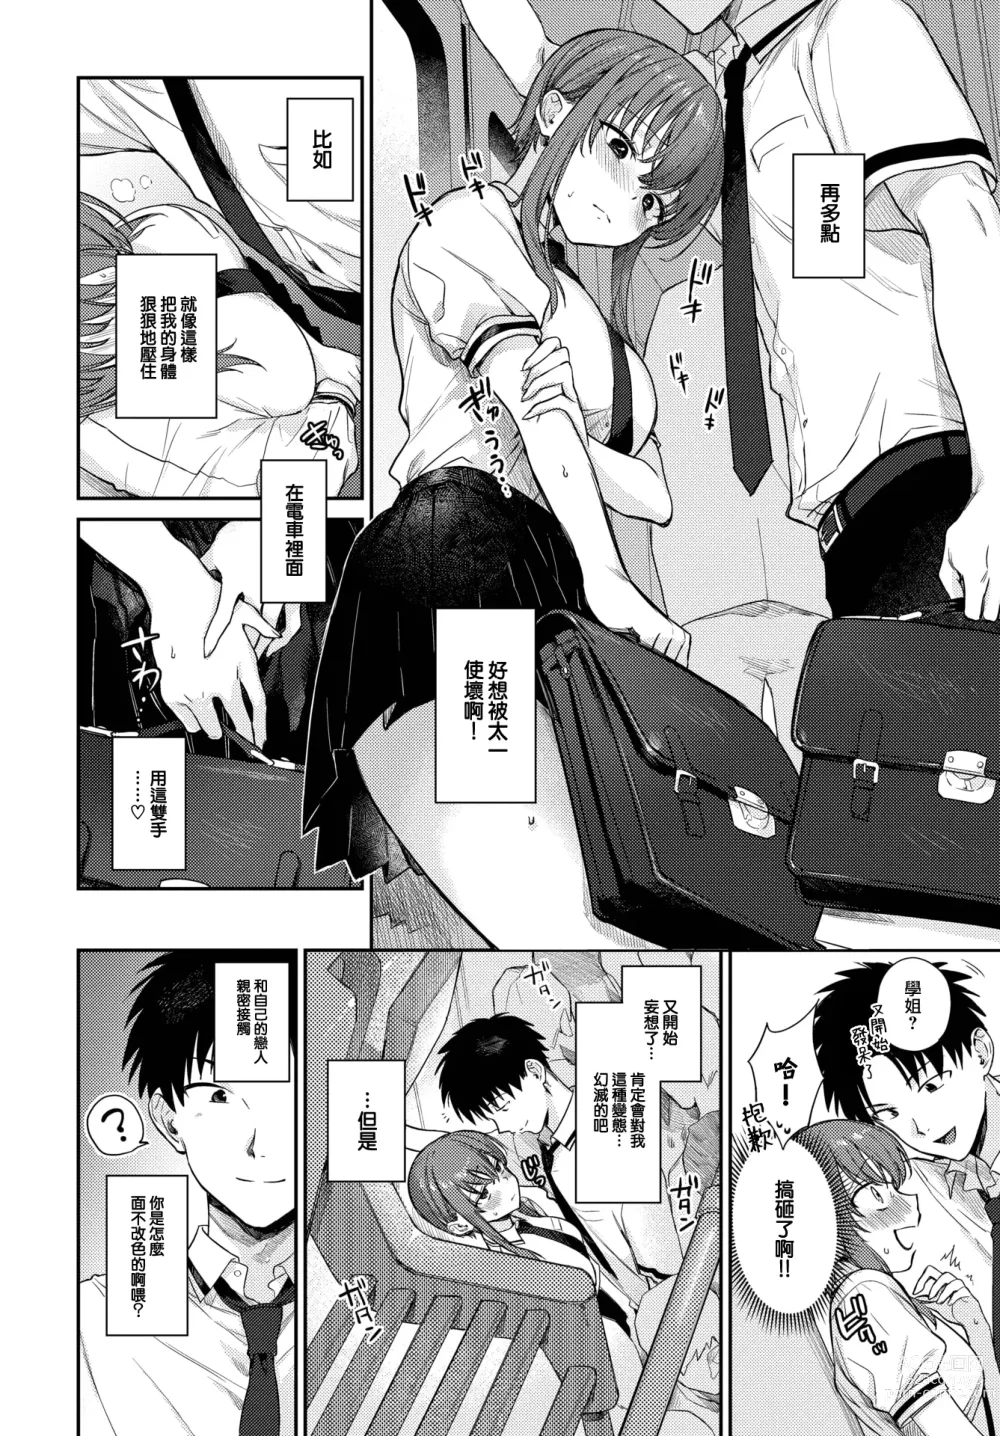 Page 3 of manga Come Pain!